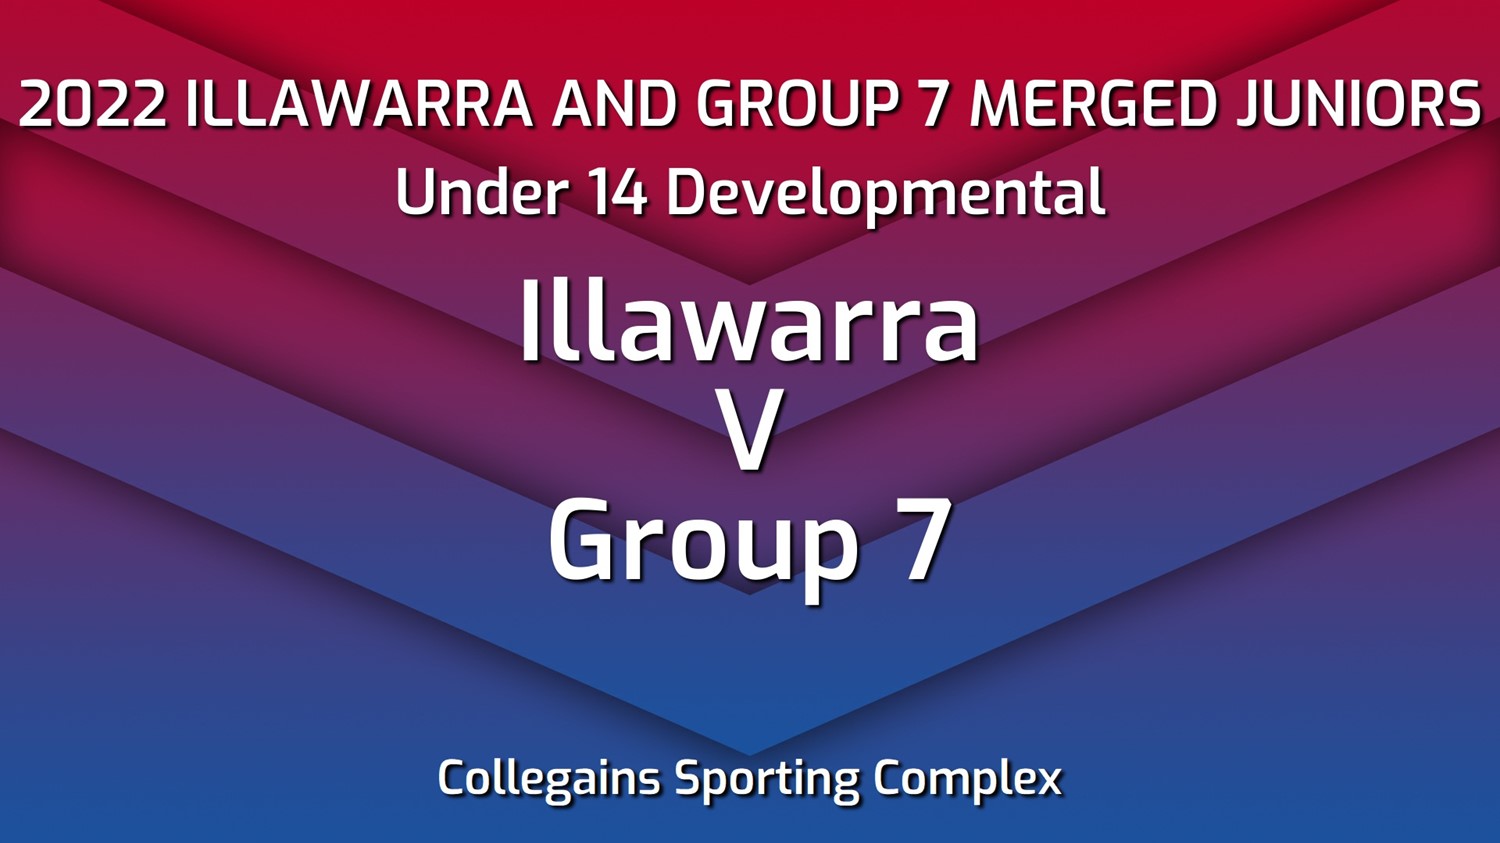 220917-Illawarra and Group 7 Merged Juniors Under 14 Developmental - Illawarra v Group 7 Minigame Slate Image